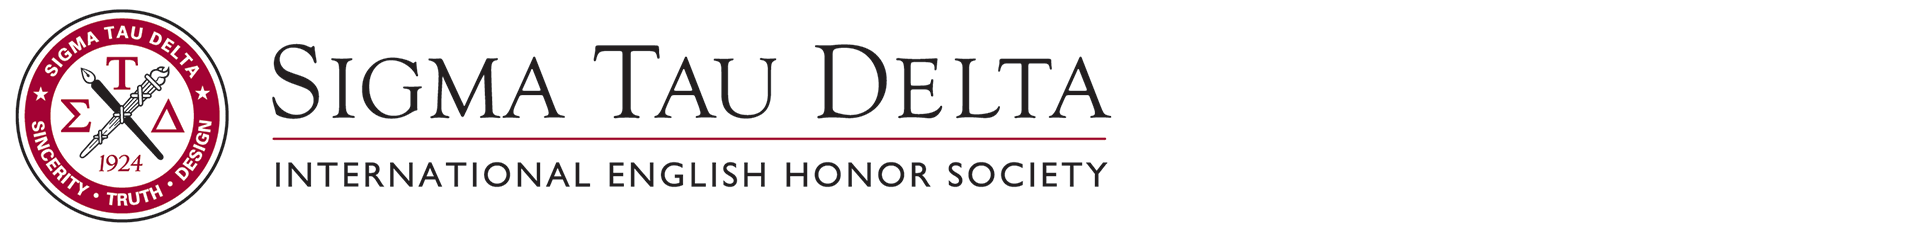 Sigma Tau Delta International English Honor Society